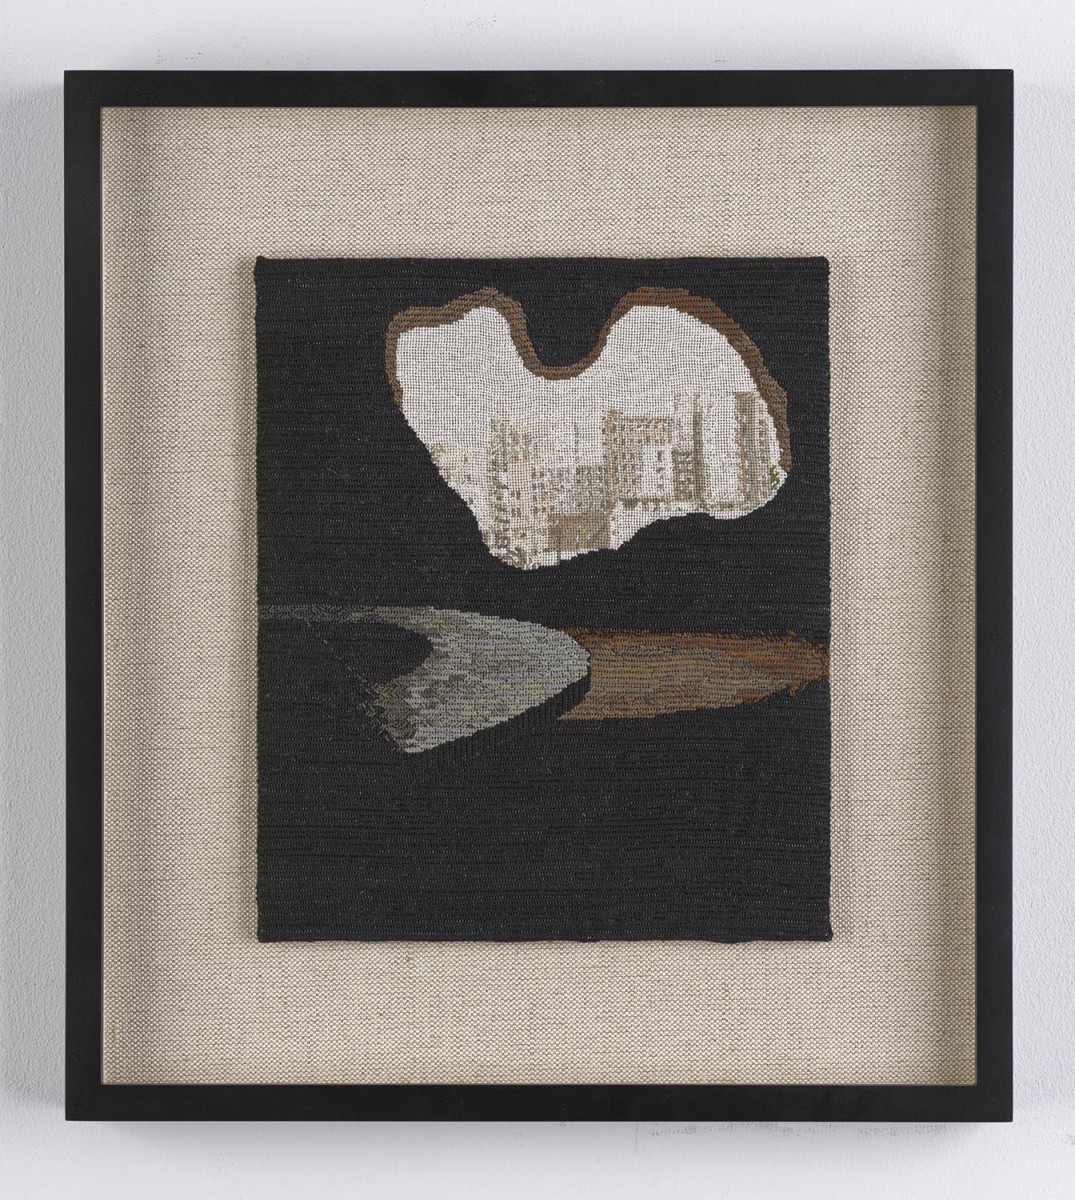 Narelle Jubelin, As yet untitled (Lina Bo Bardi, 1987), 2014, cotton on silk petit point, 37 × 33cm, framed. © the artist, Courtesy of Marlborough Contemporary, London. Photo: Francis Ware.